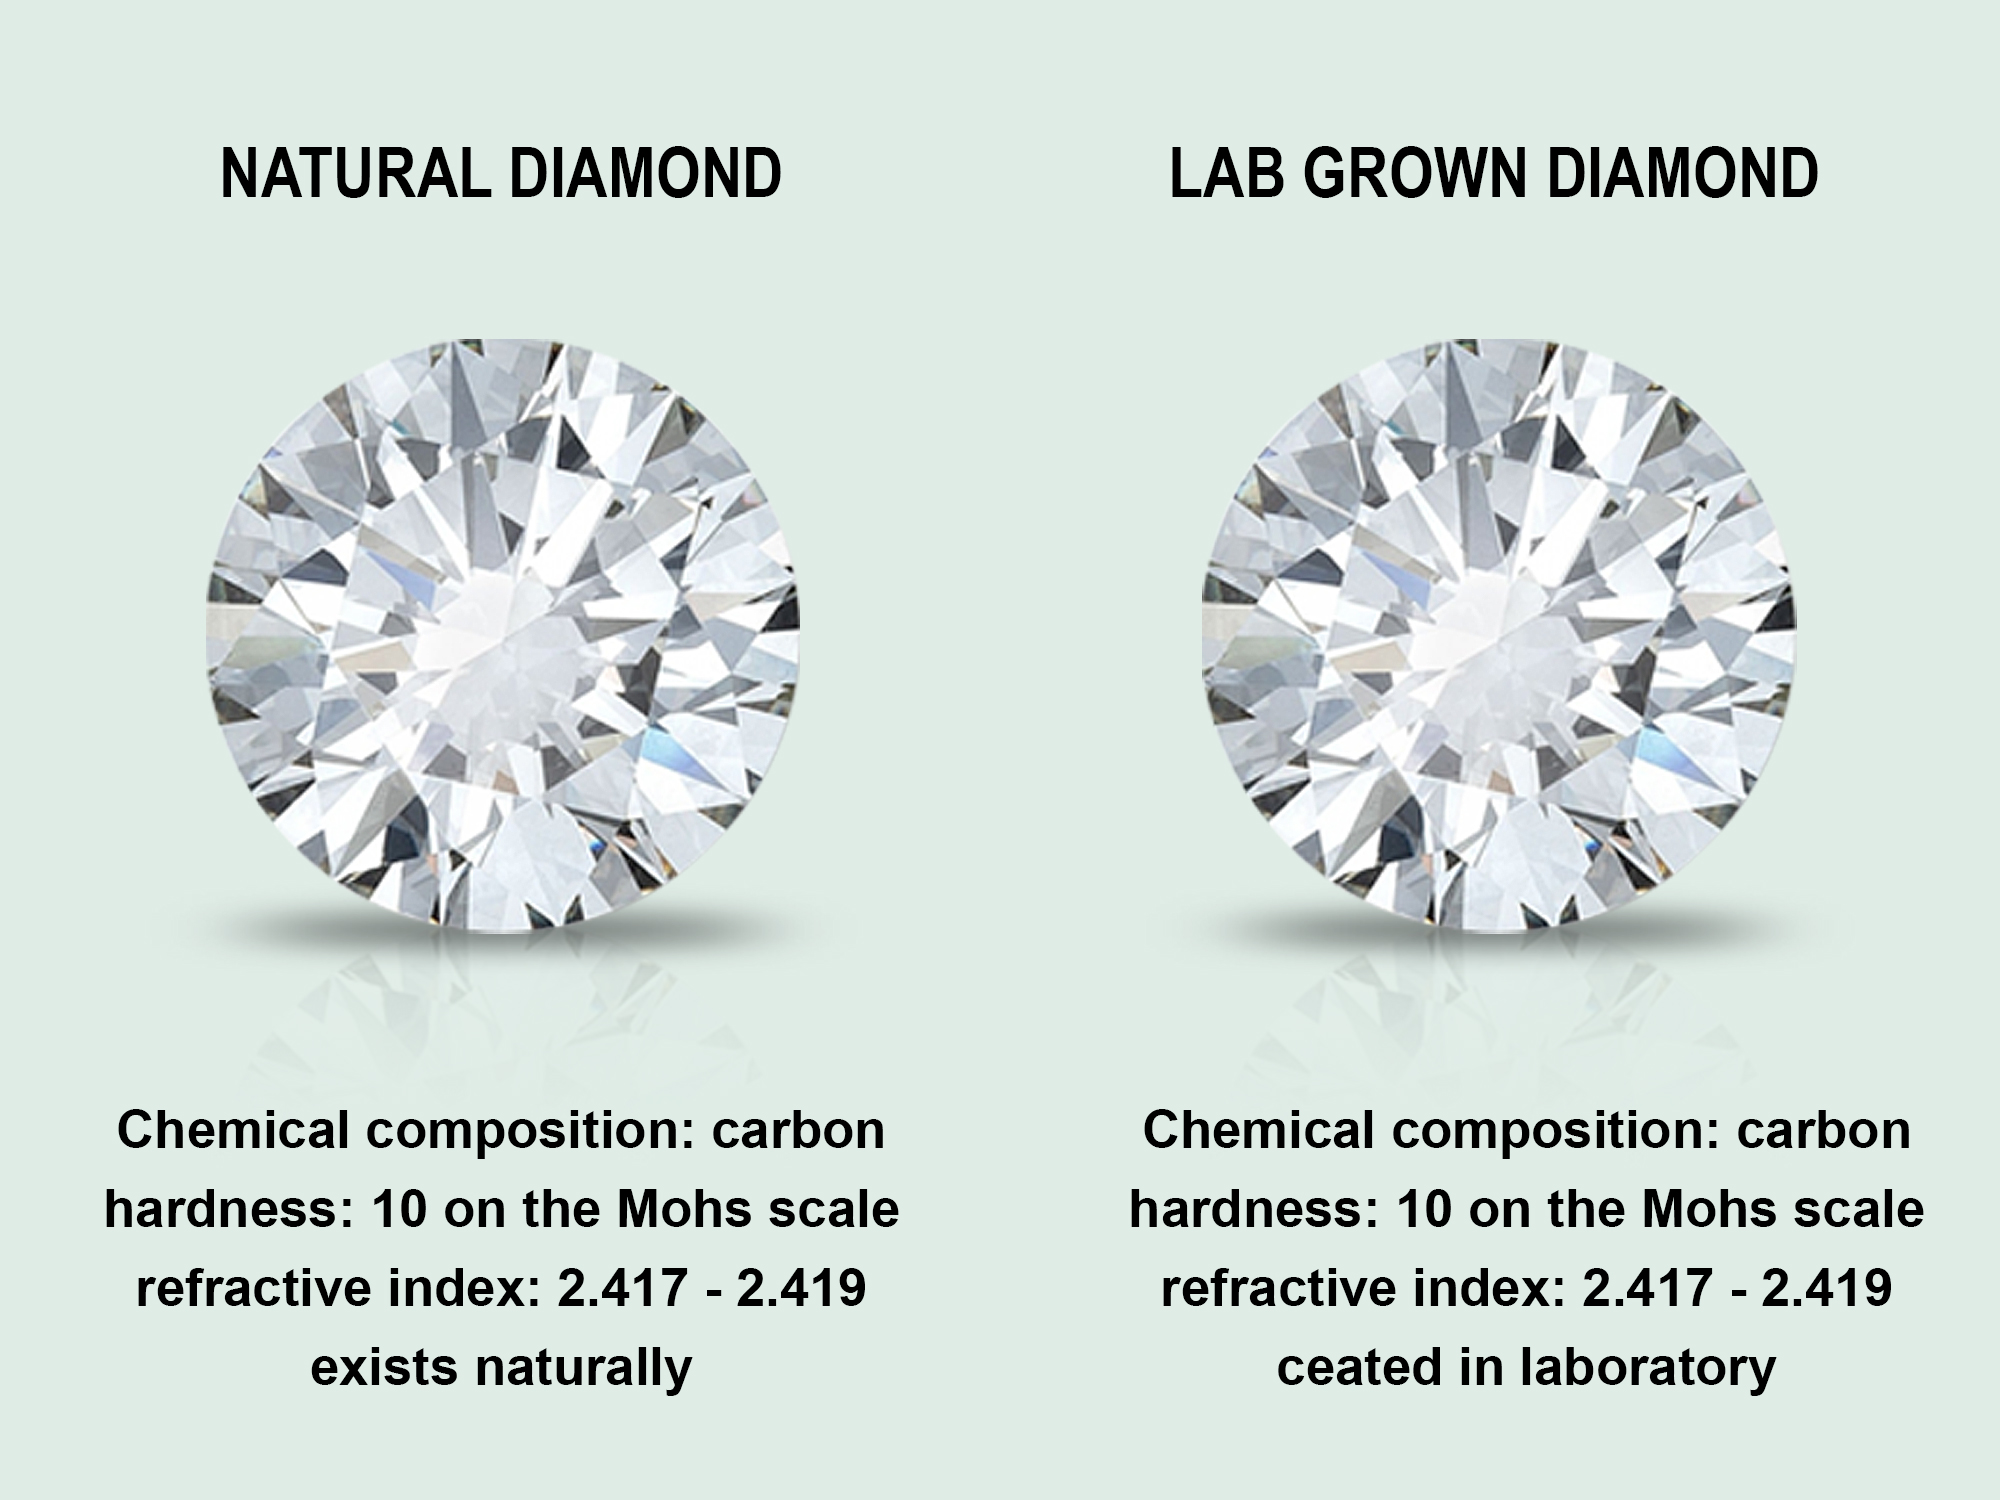 Is lab grown diamonds as hard as natural diamonds